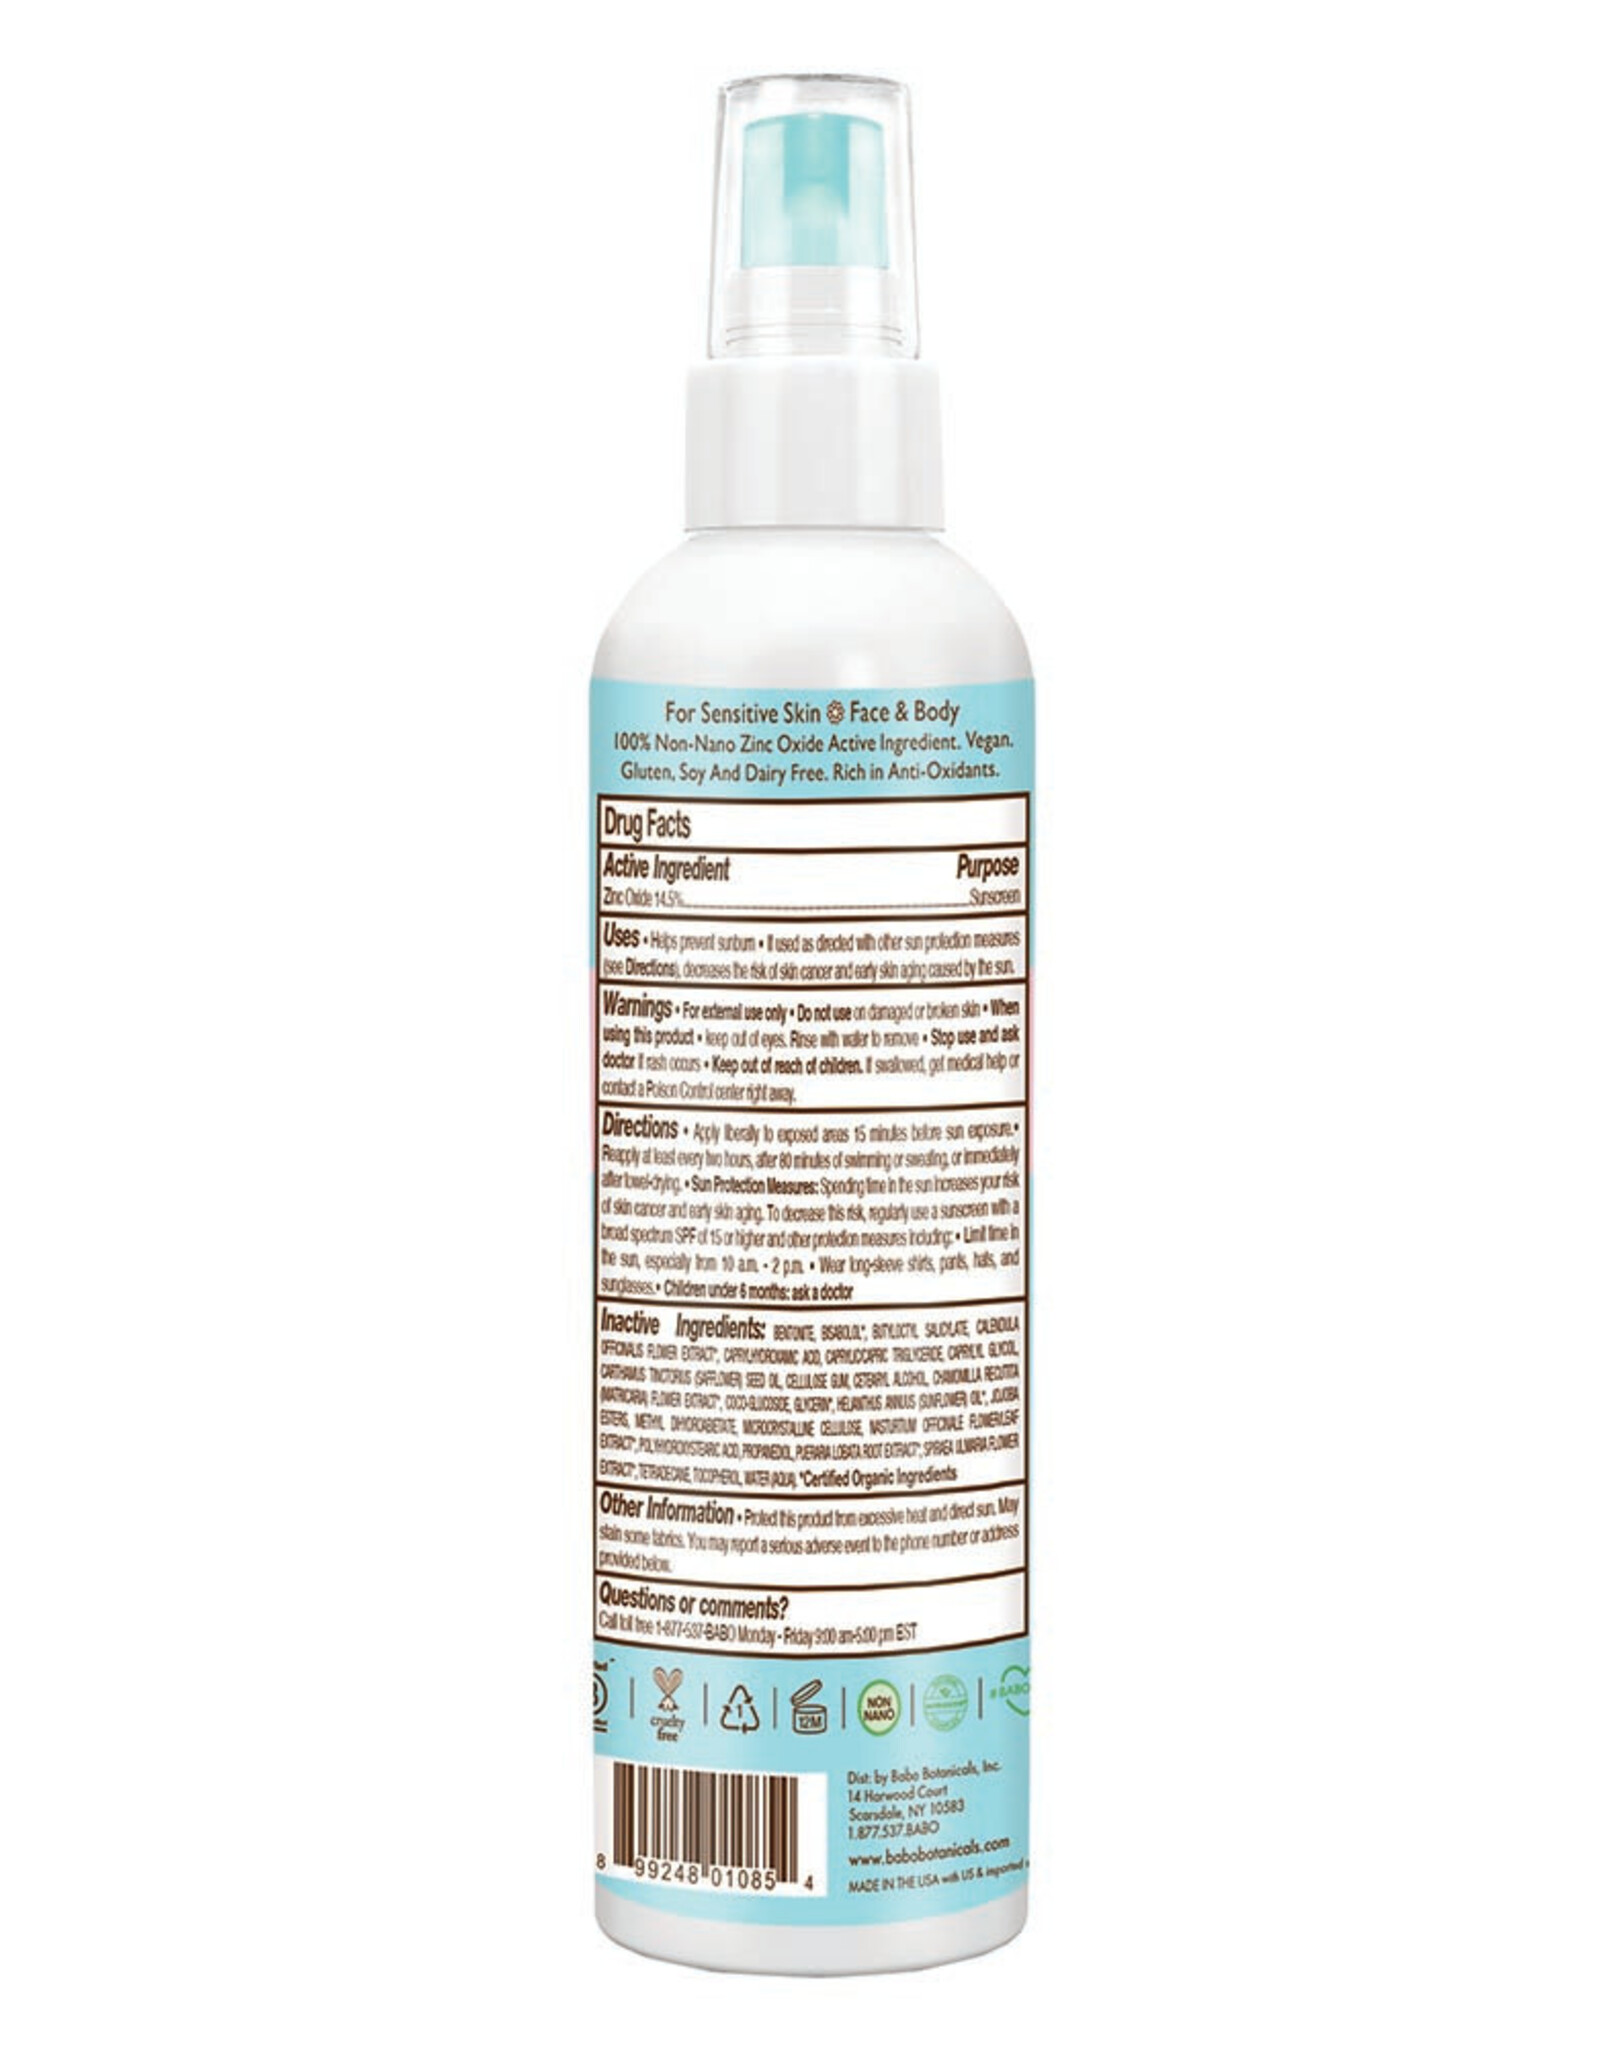 Babo Botanicals Babo Baby Skin Mineral Sunscreen Spray - SPF30 - 6oz